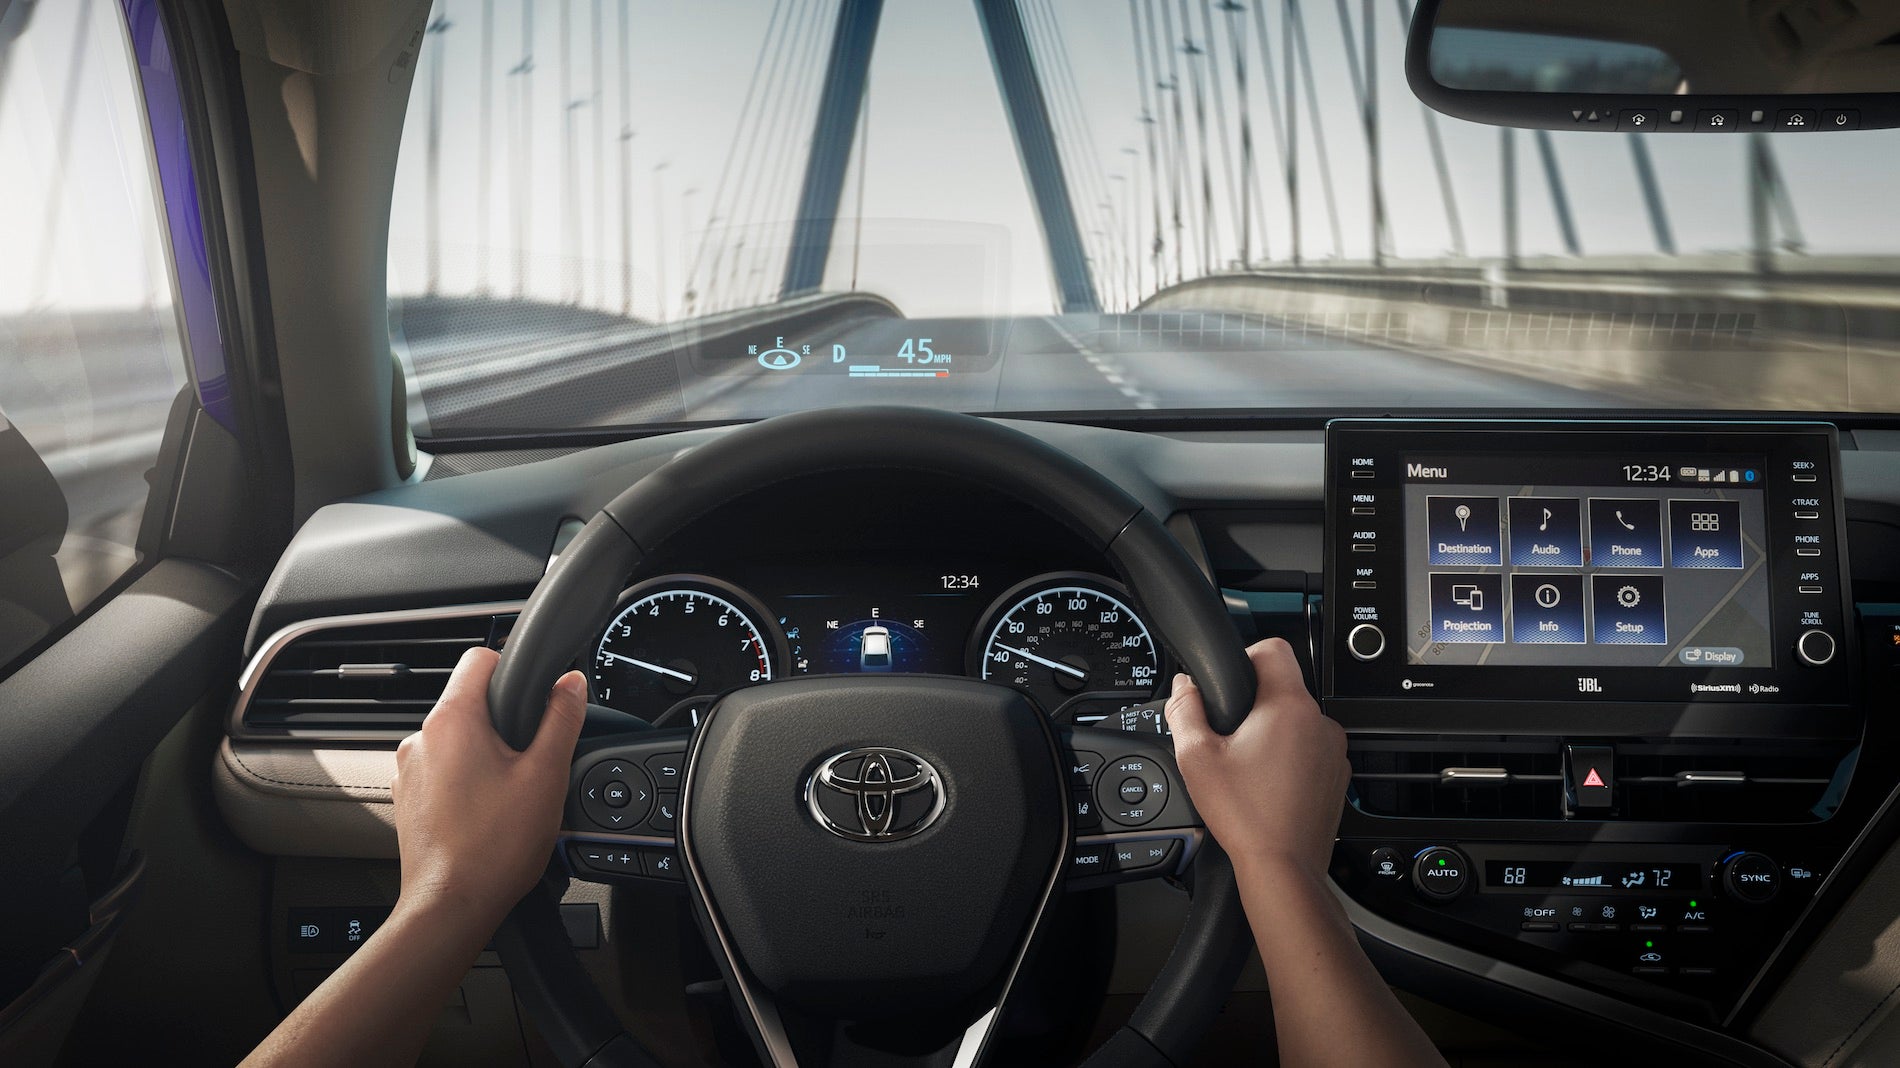 2021 Toyota Camry hybrid Sedan Interior Review - Seating, Infotainment,  Dashboard and Features | CarIndigo.com